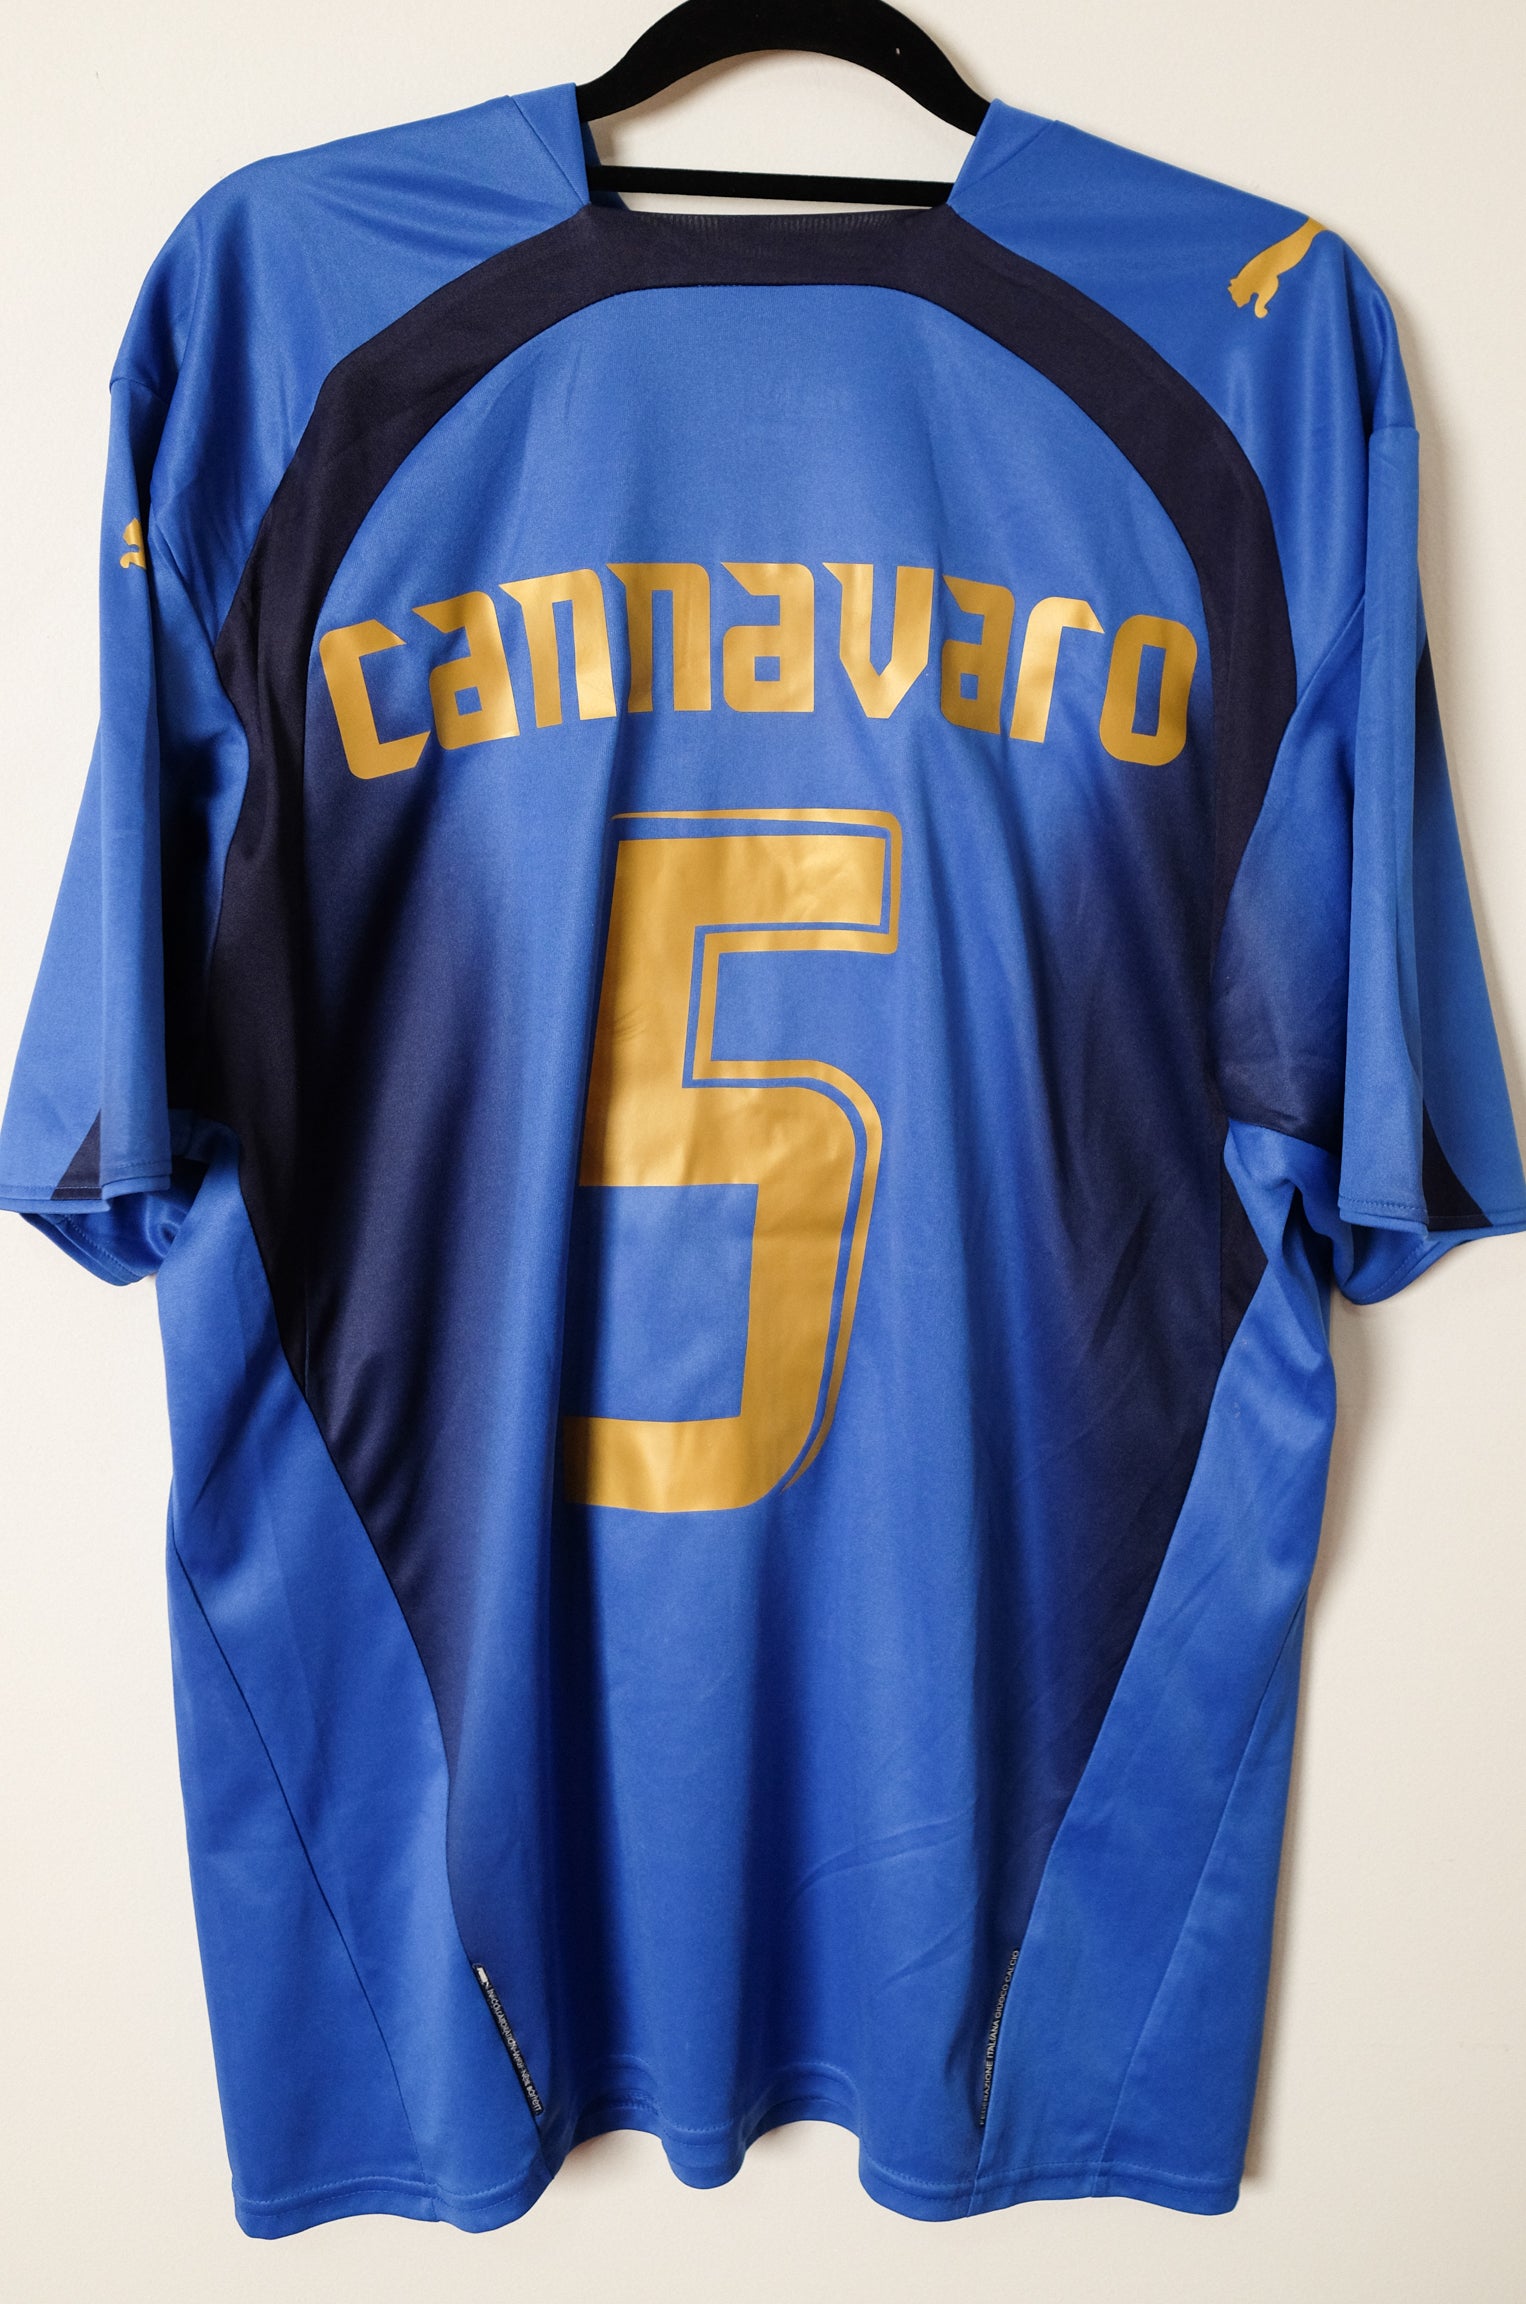 Fabio Cannavaro Italy authentic shirt